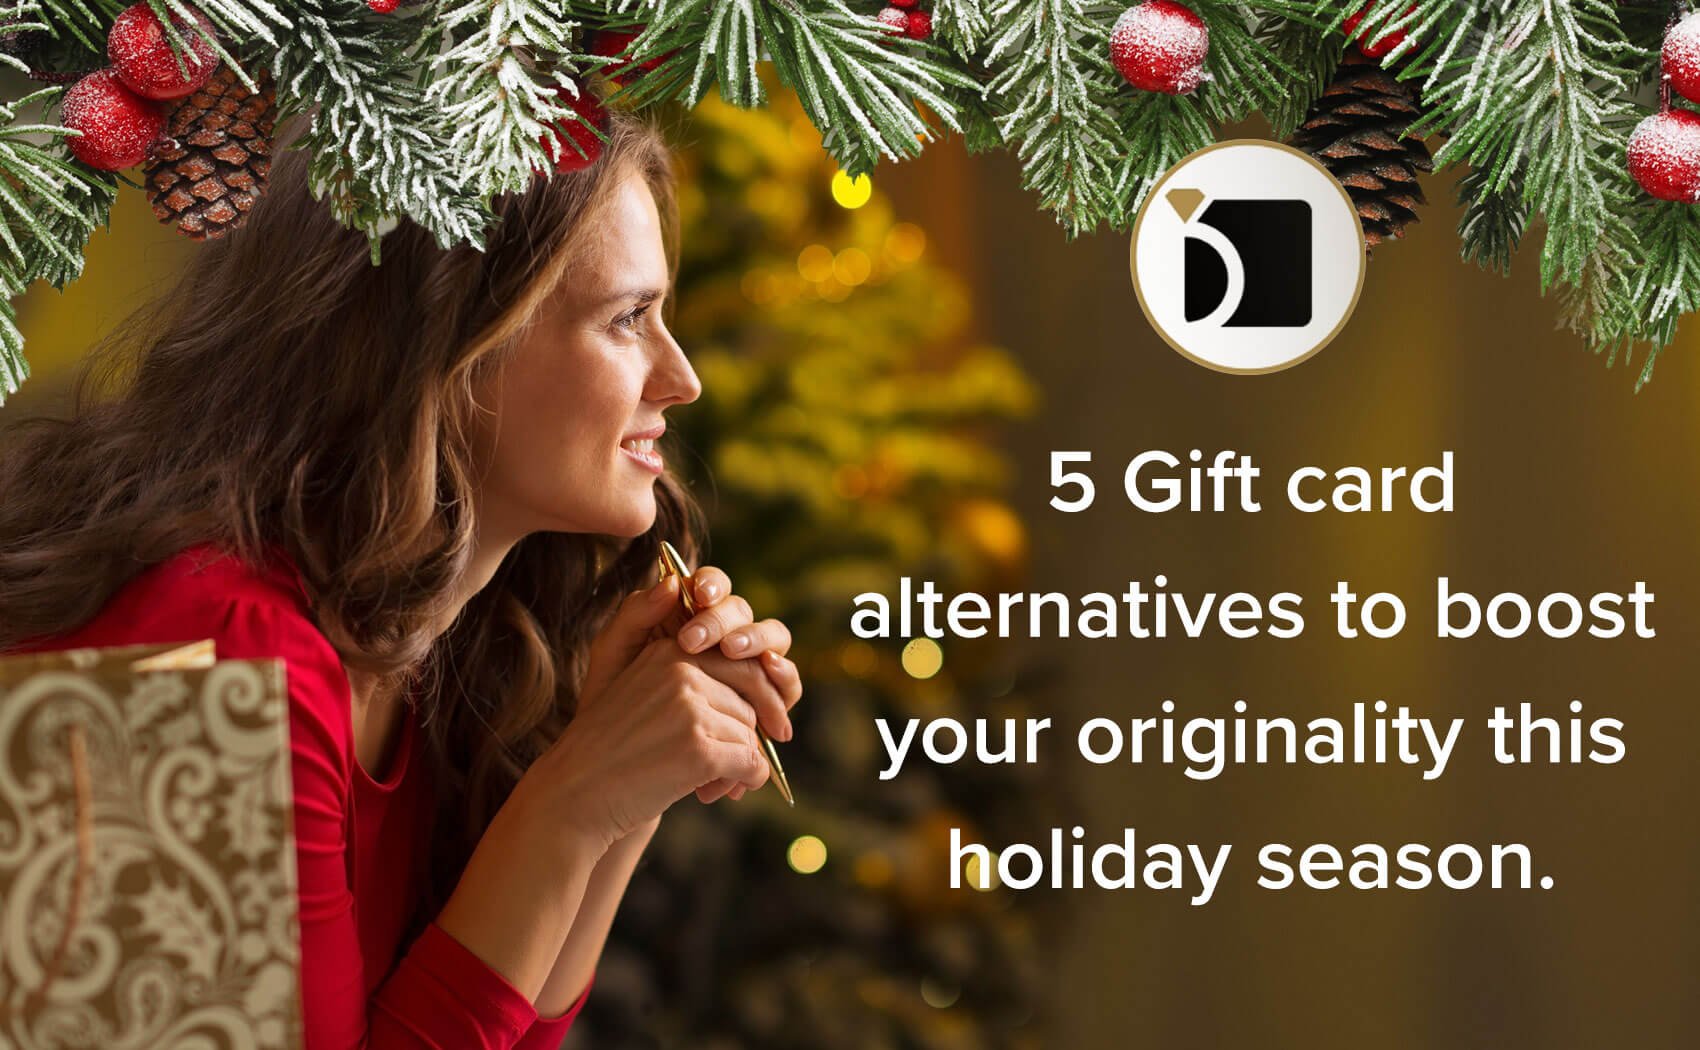 5 Gift Card Alternatives for the Holiday Season